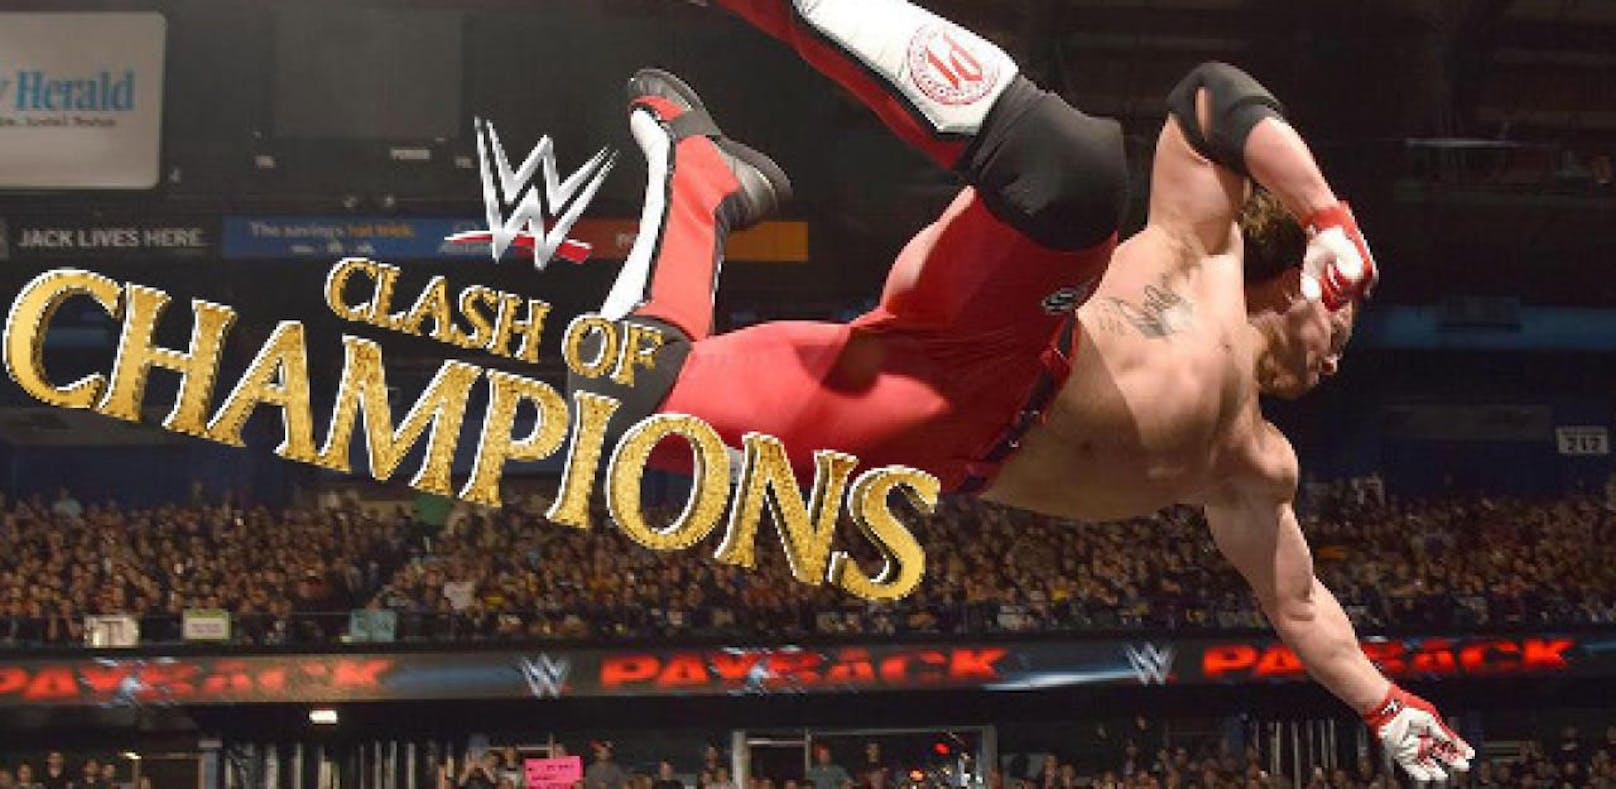 So heftig war der WWE Clash of Champions